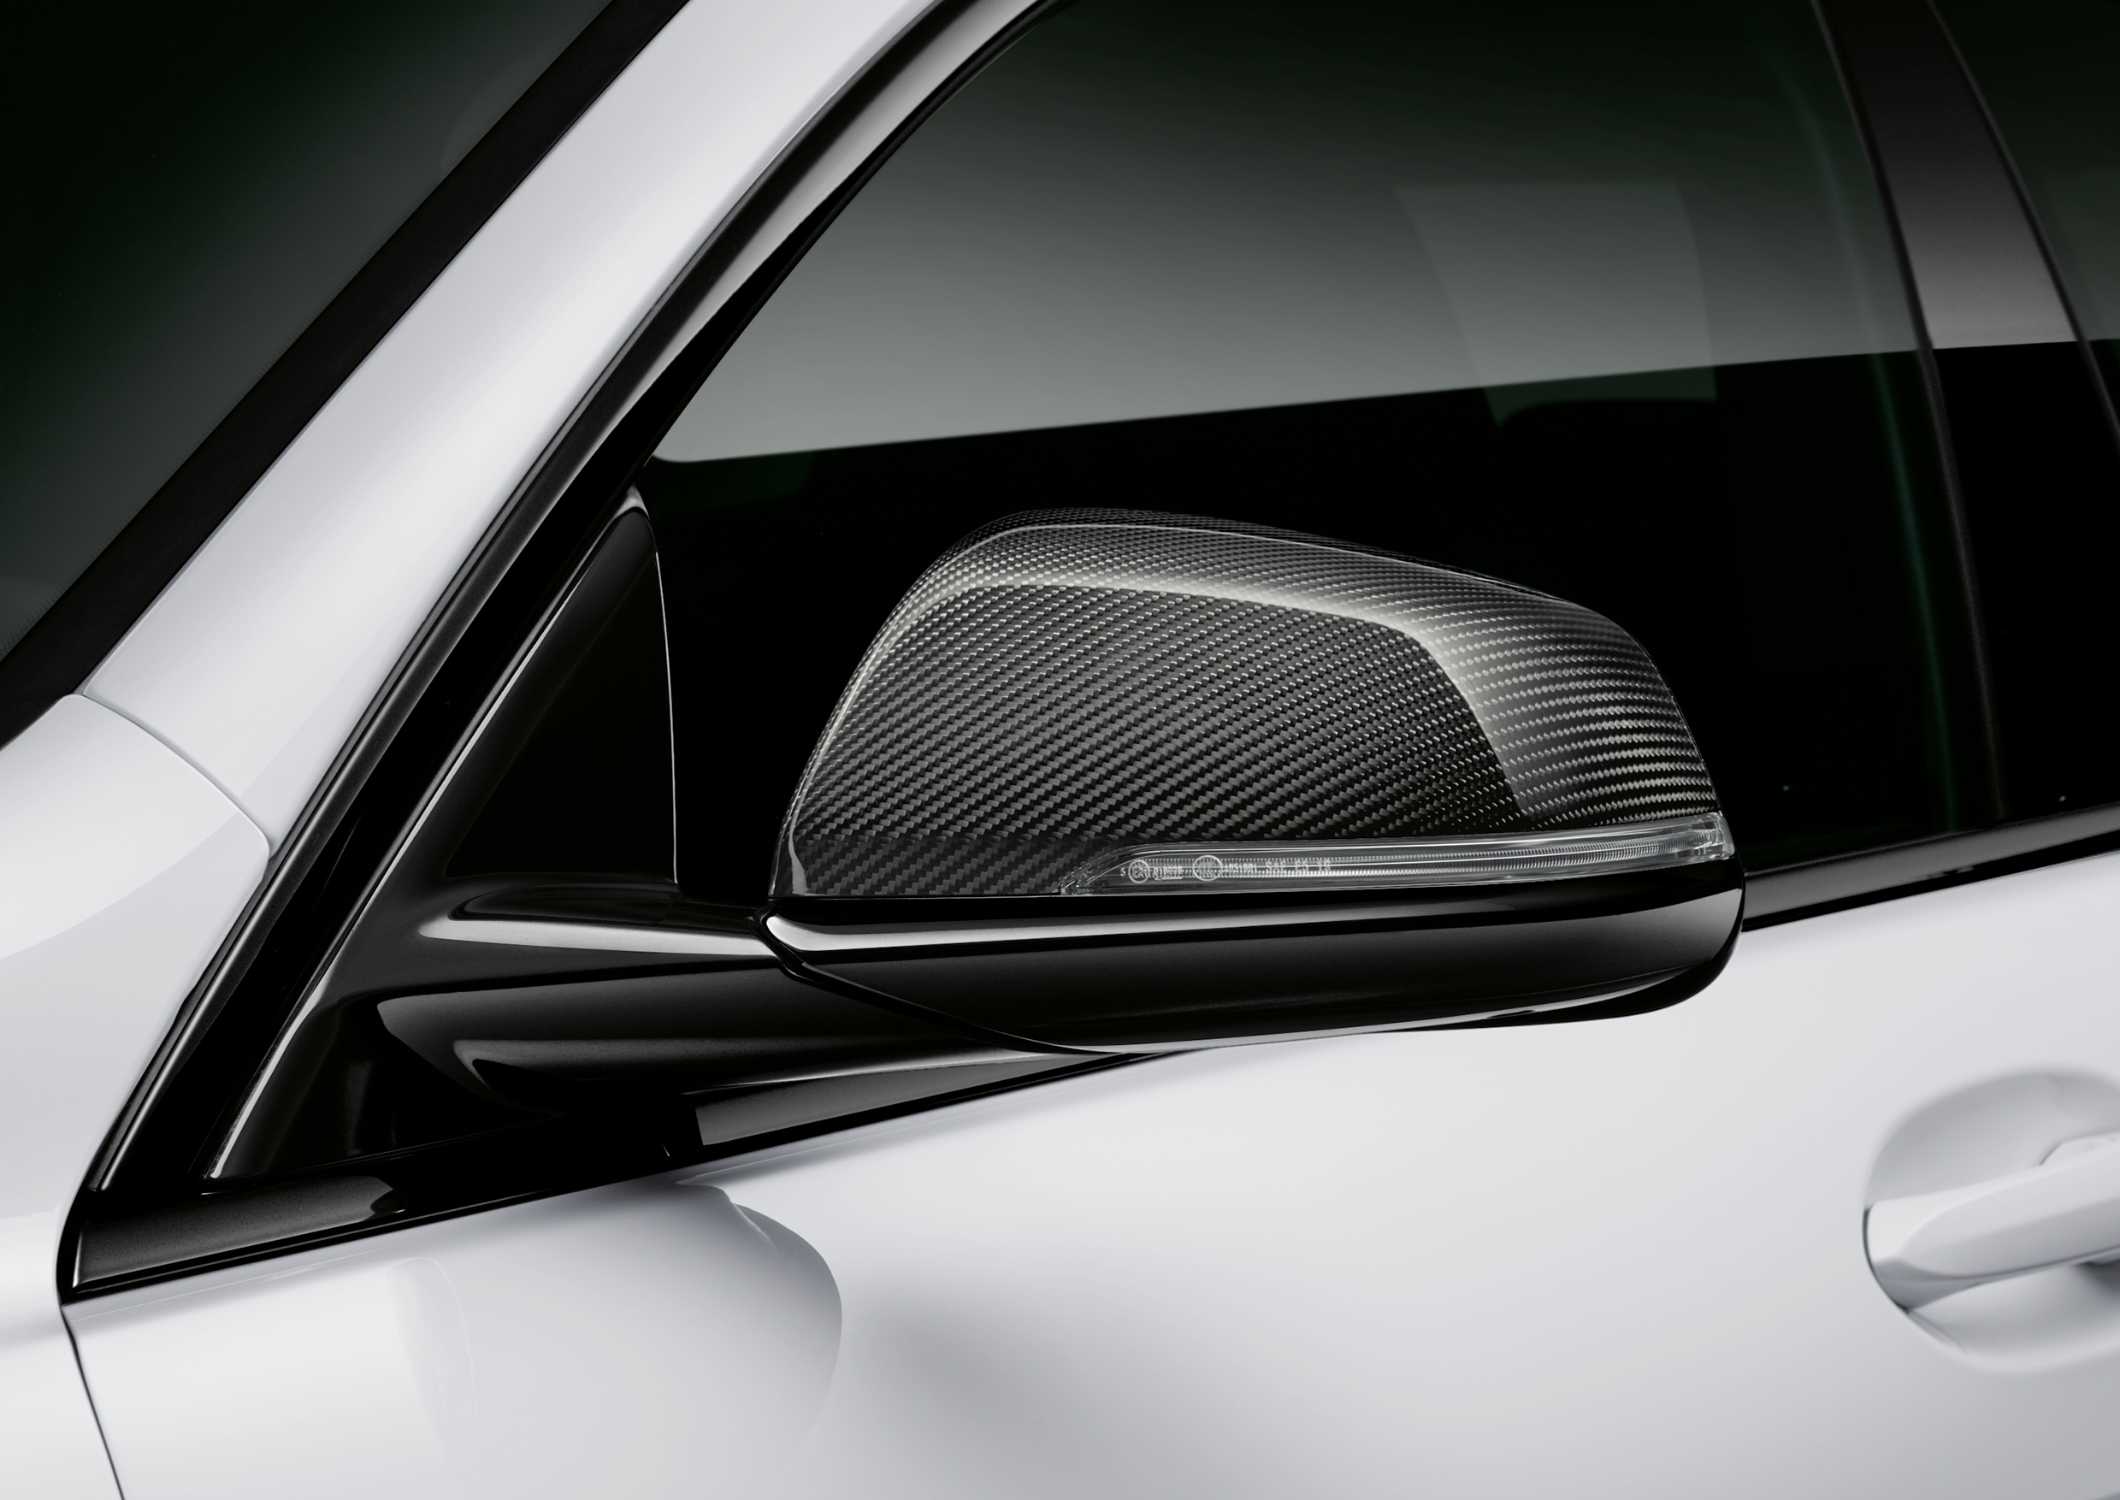 BMW 2 Series Gran Coupe, M Performance exterior mirror cap in carbon fibre (10/2019).